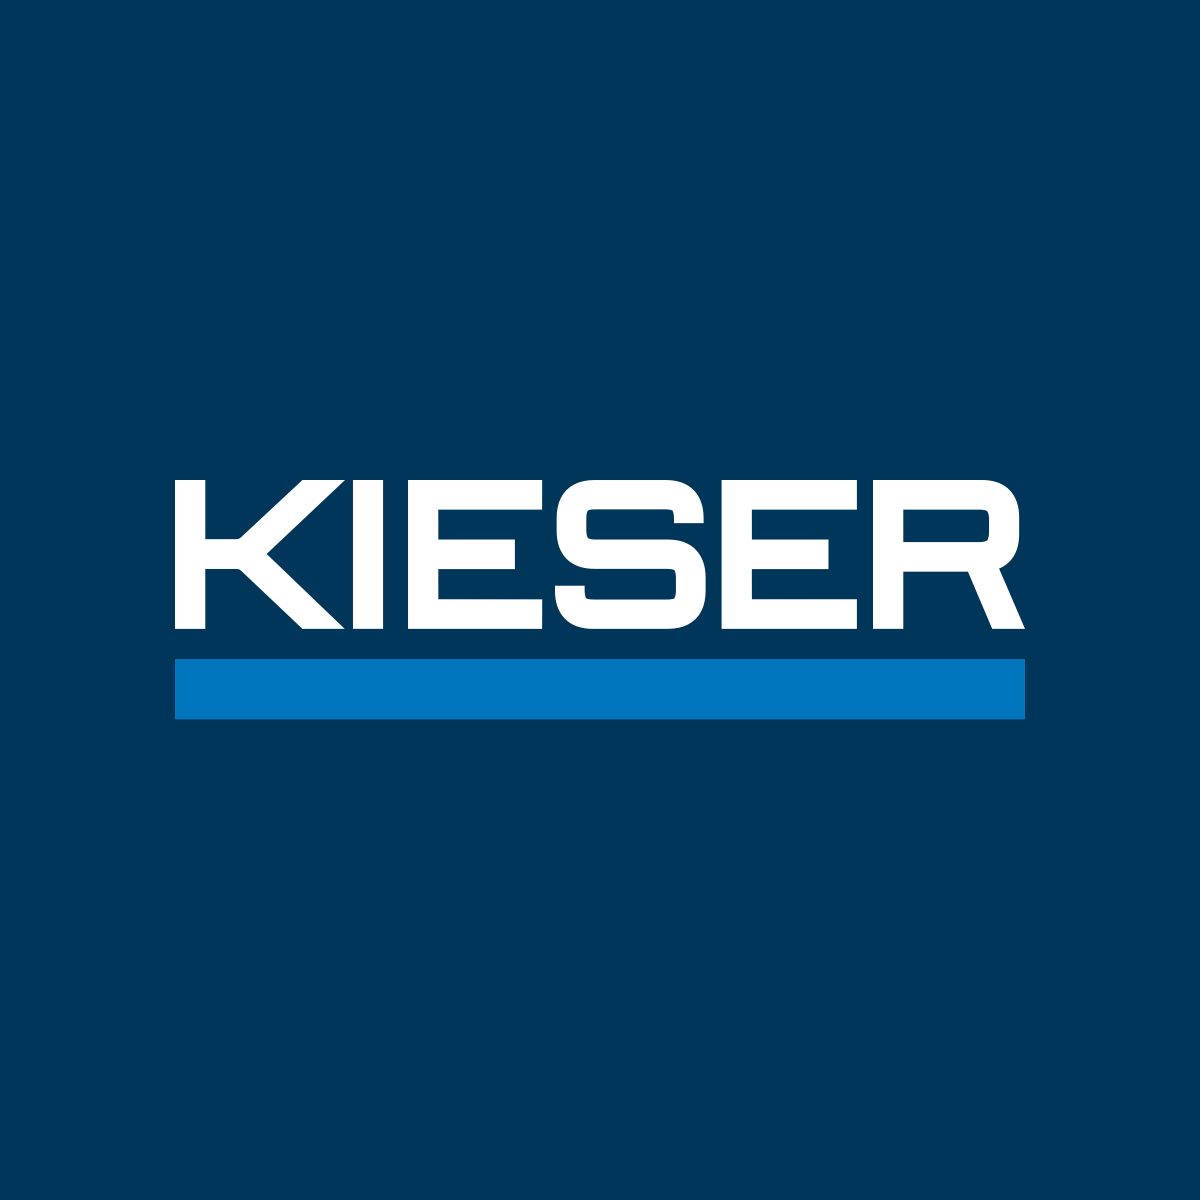 (c) Kieser.com